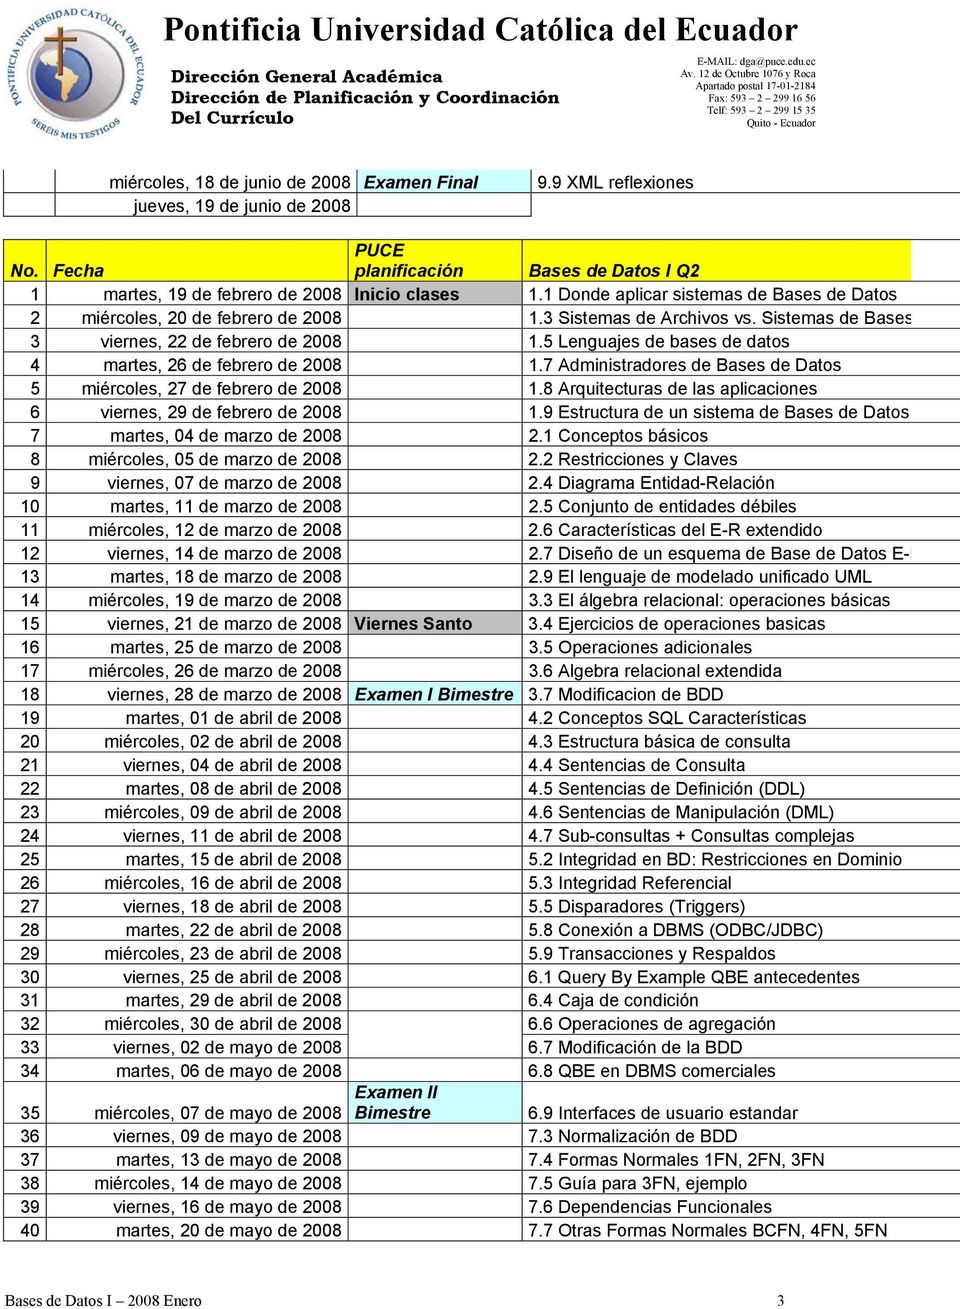 5 Lenguajes de bases de datos 4 martes, 26 de febrero de 2008 1.7 Administradores de Bases de Datos 5 miércoles, 27 de febrero de 2008 1.